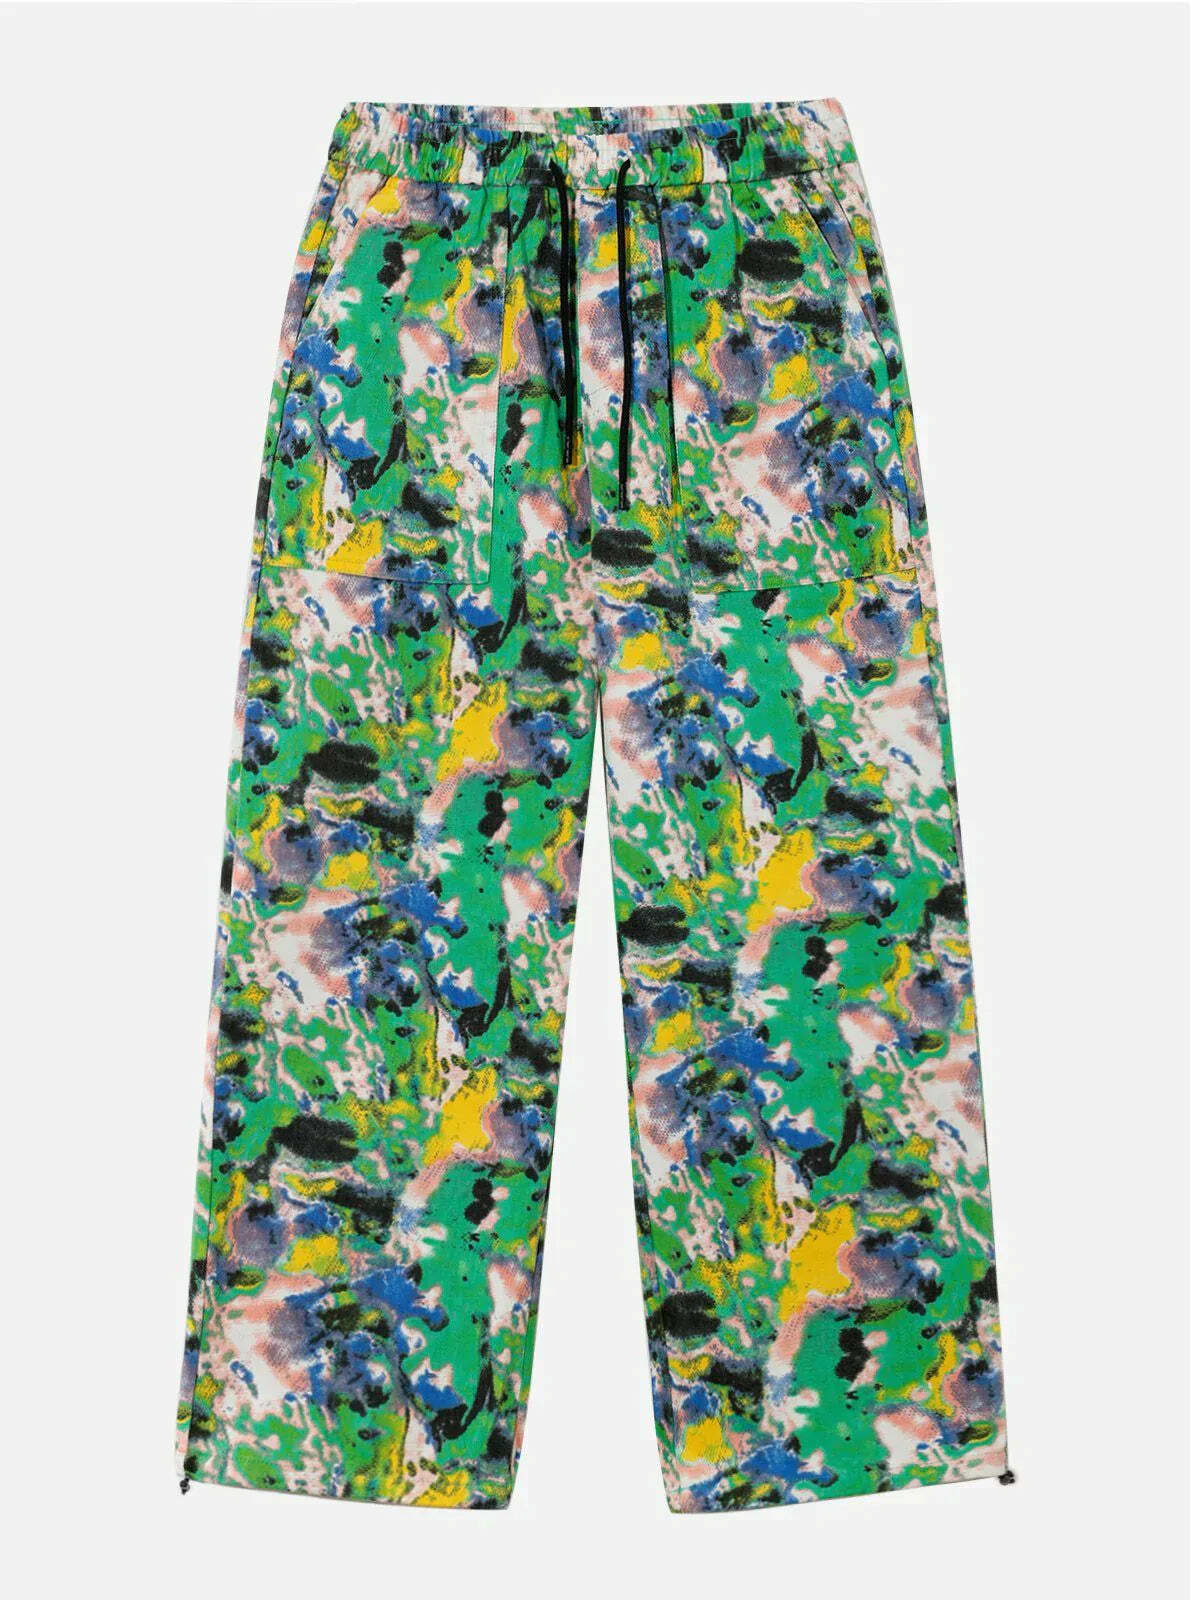 vibrant tiedye graffiti pants edgy streetwear 3086